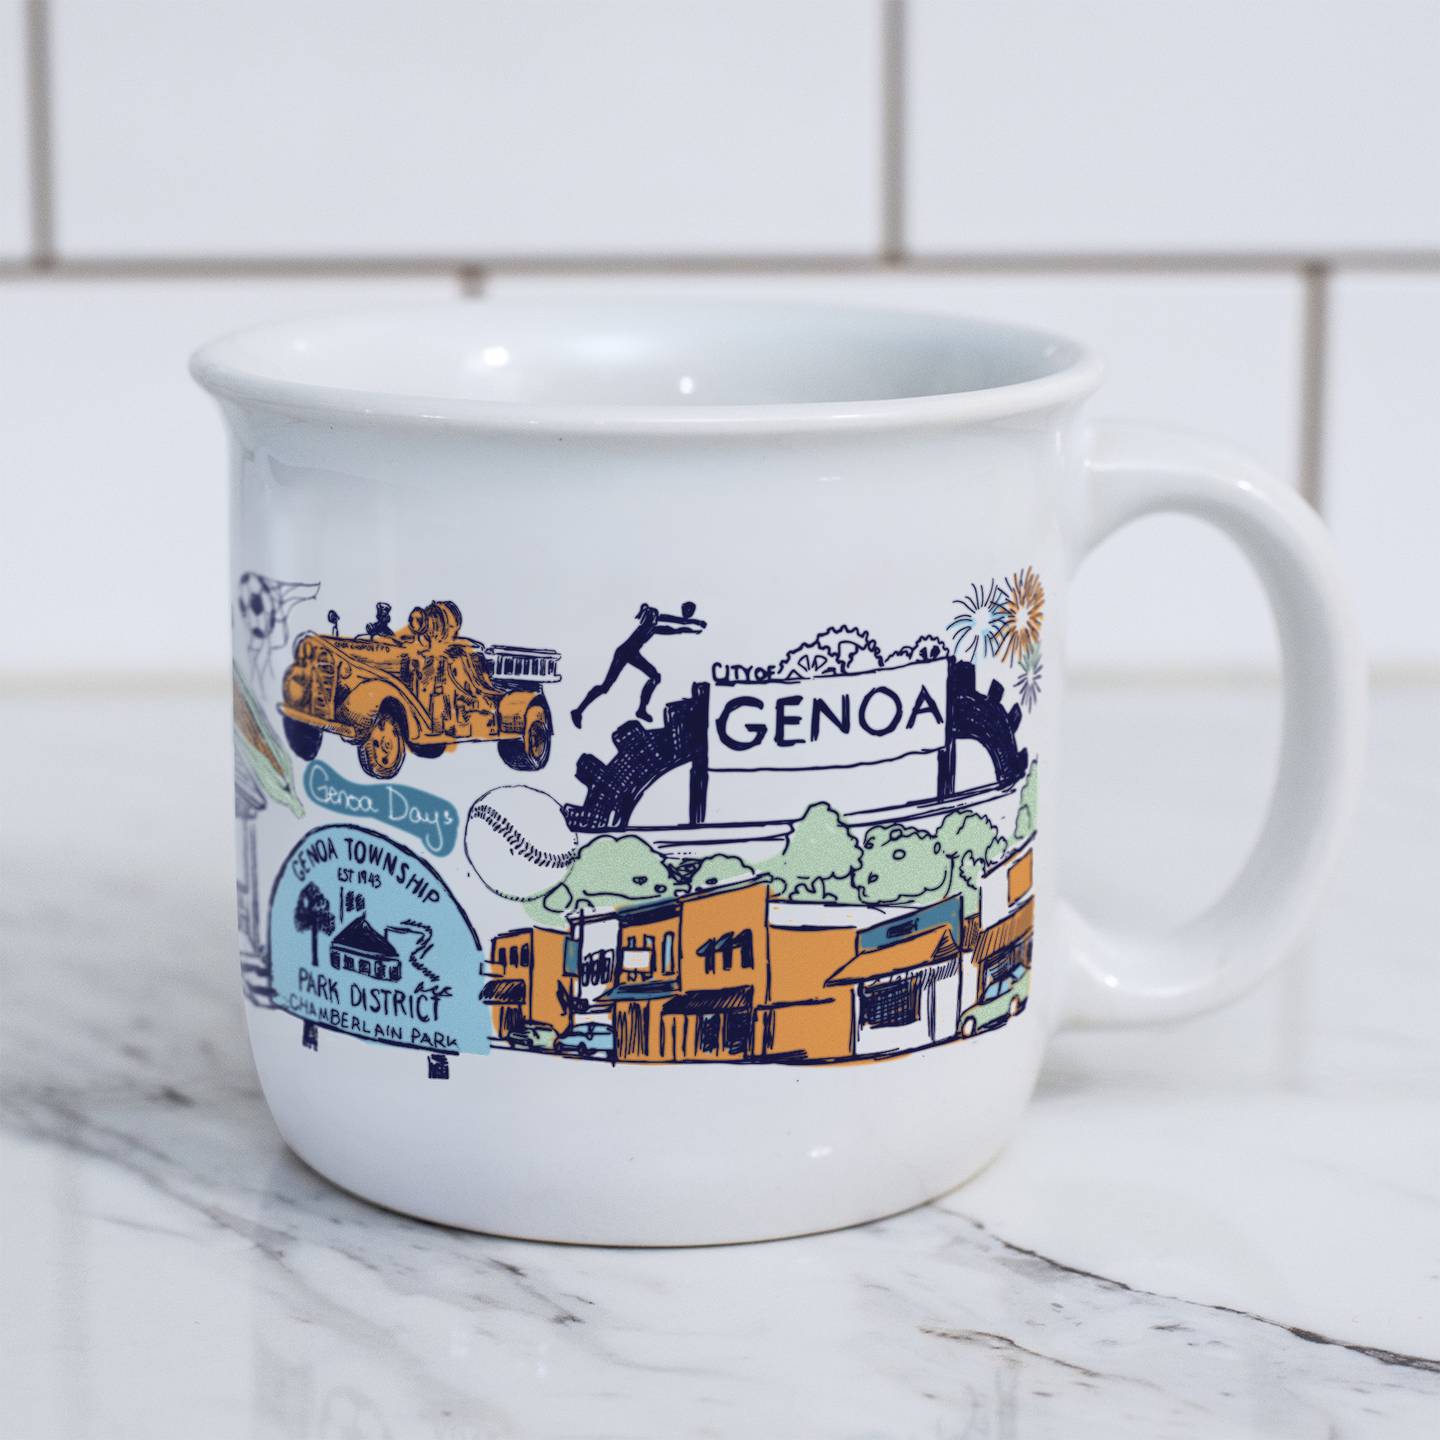 Northern Illinois University alumna Ashley Ann Klockenga has designed, and is selling DeKalb, Sycamore and Genoa coffee mugs in area coffee shops.